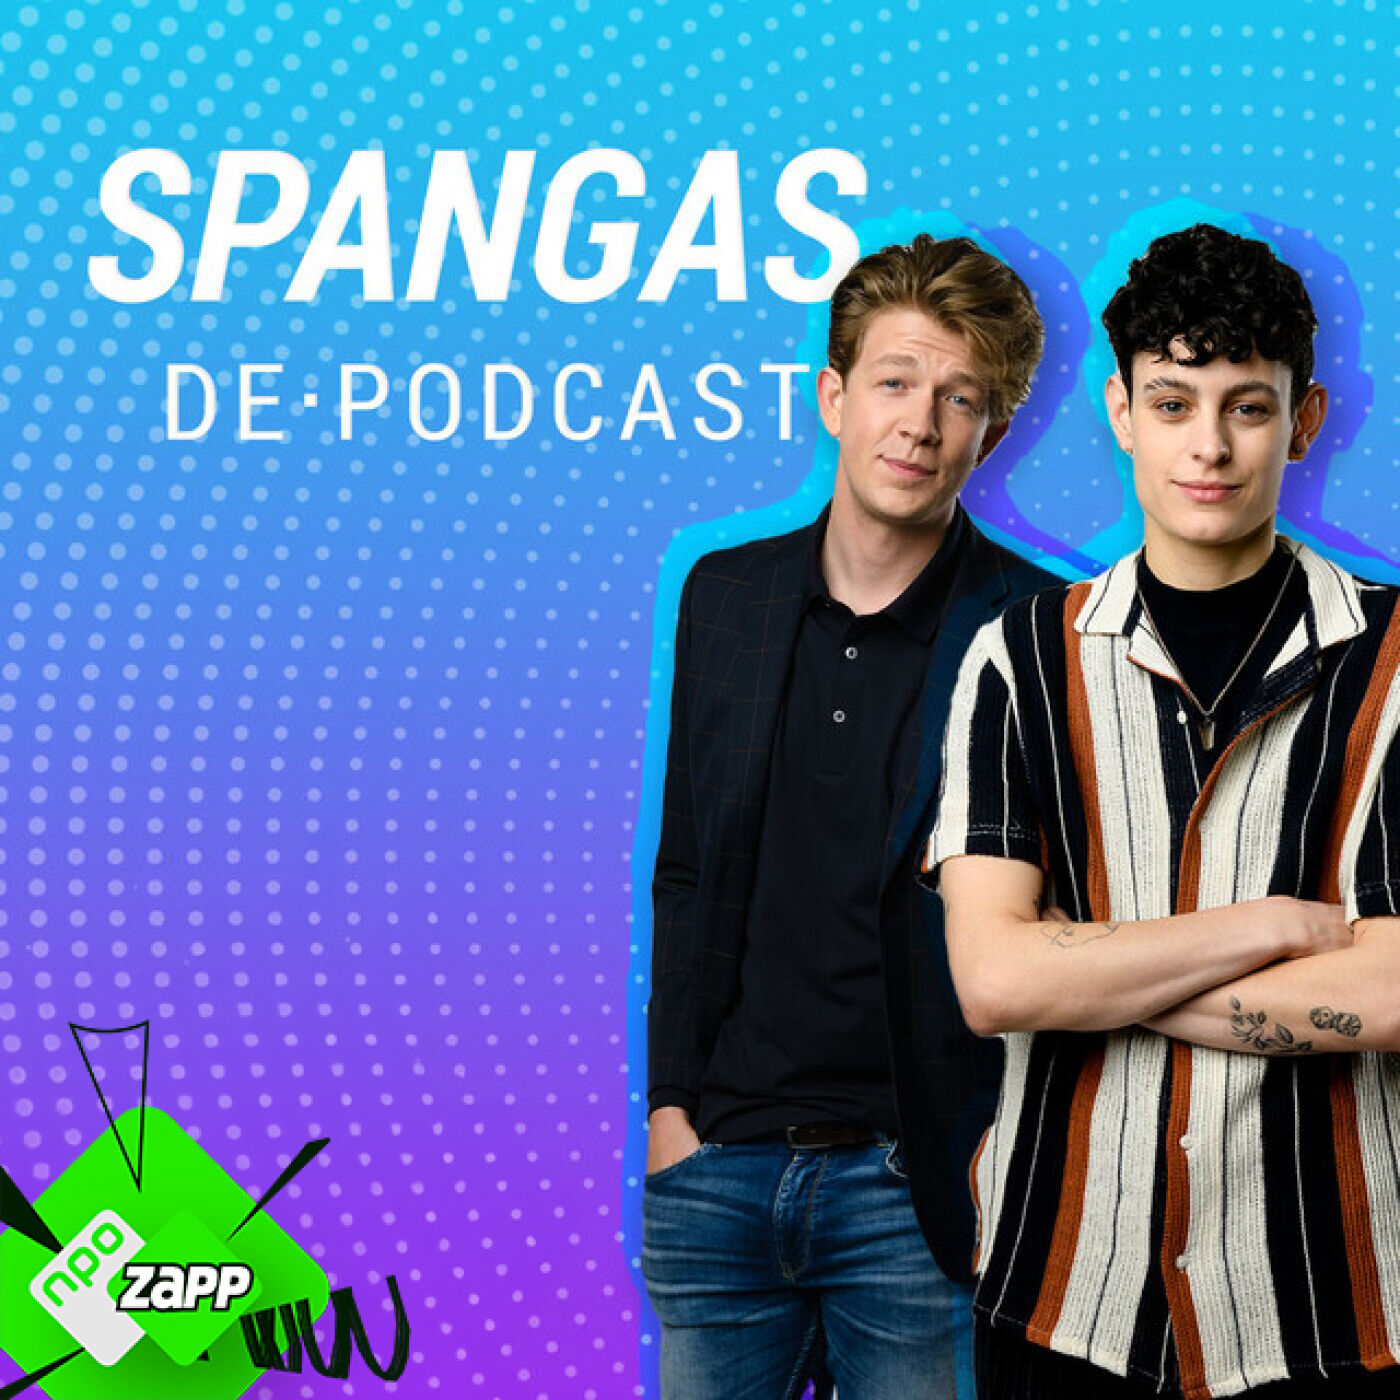 SpangaS | De kleine pauze met Tom & Thorn Podcast artwork